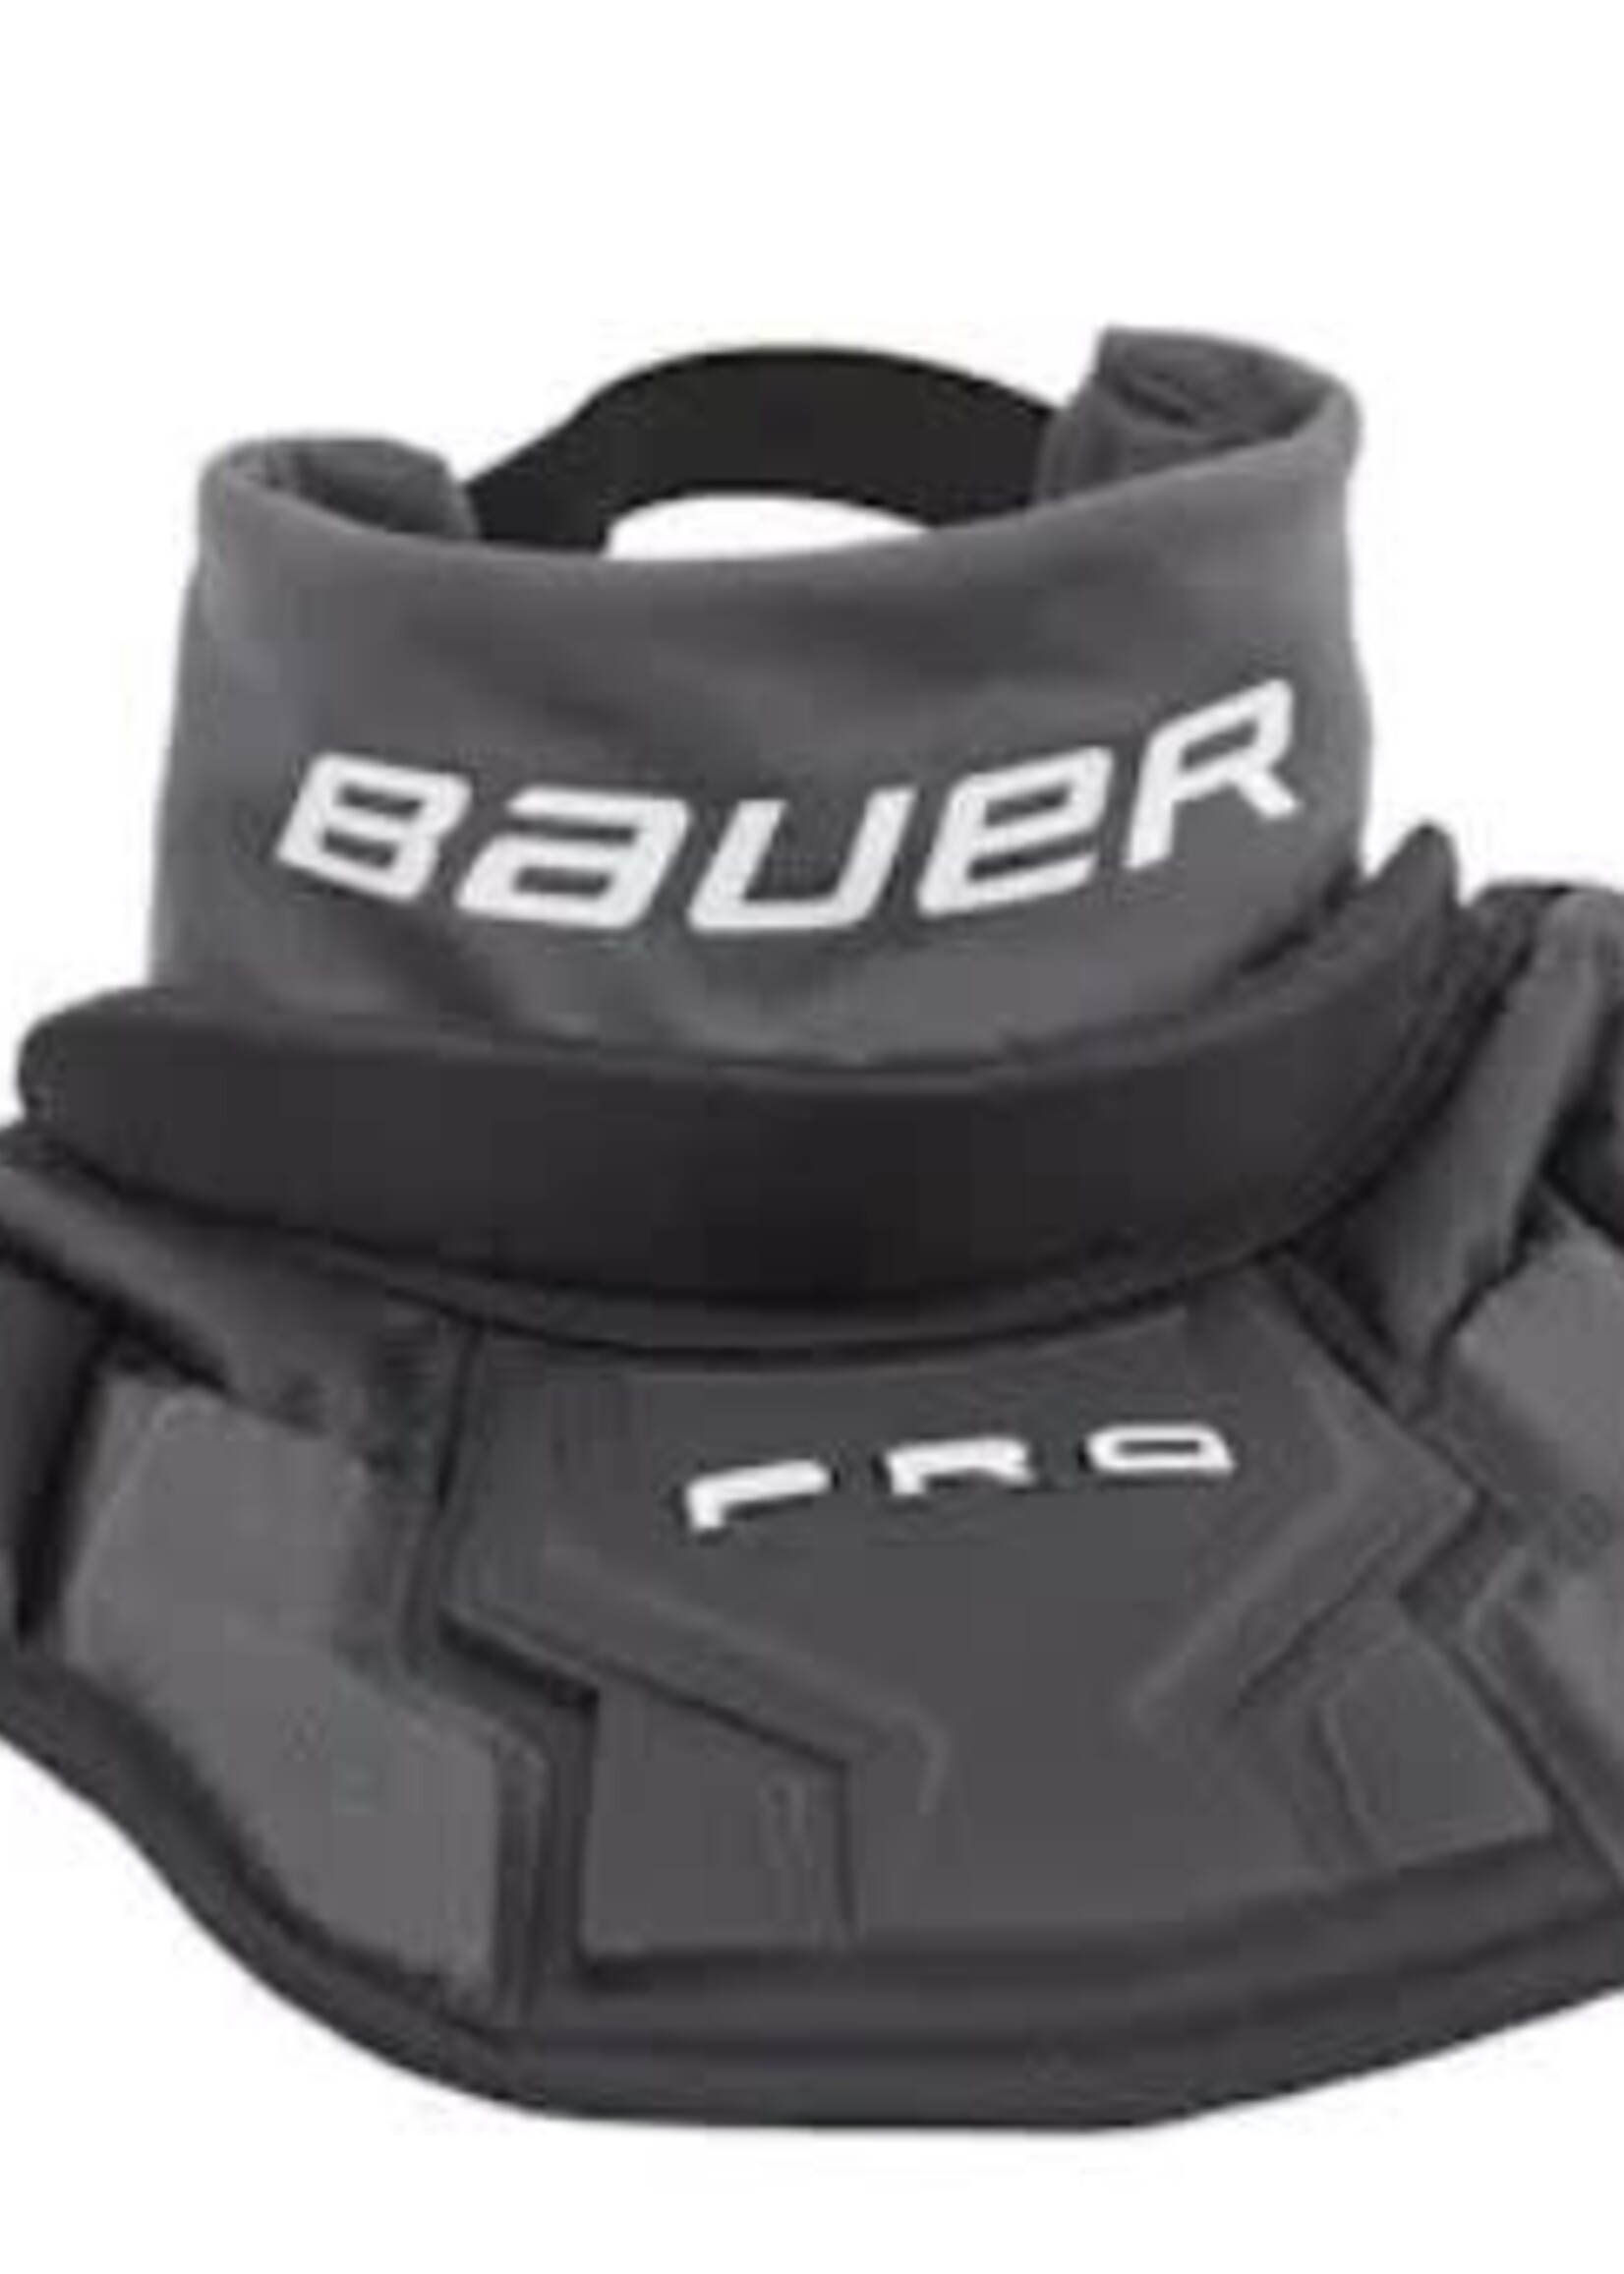 BAU Bauer Pro Certified Neck Guard SR